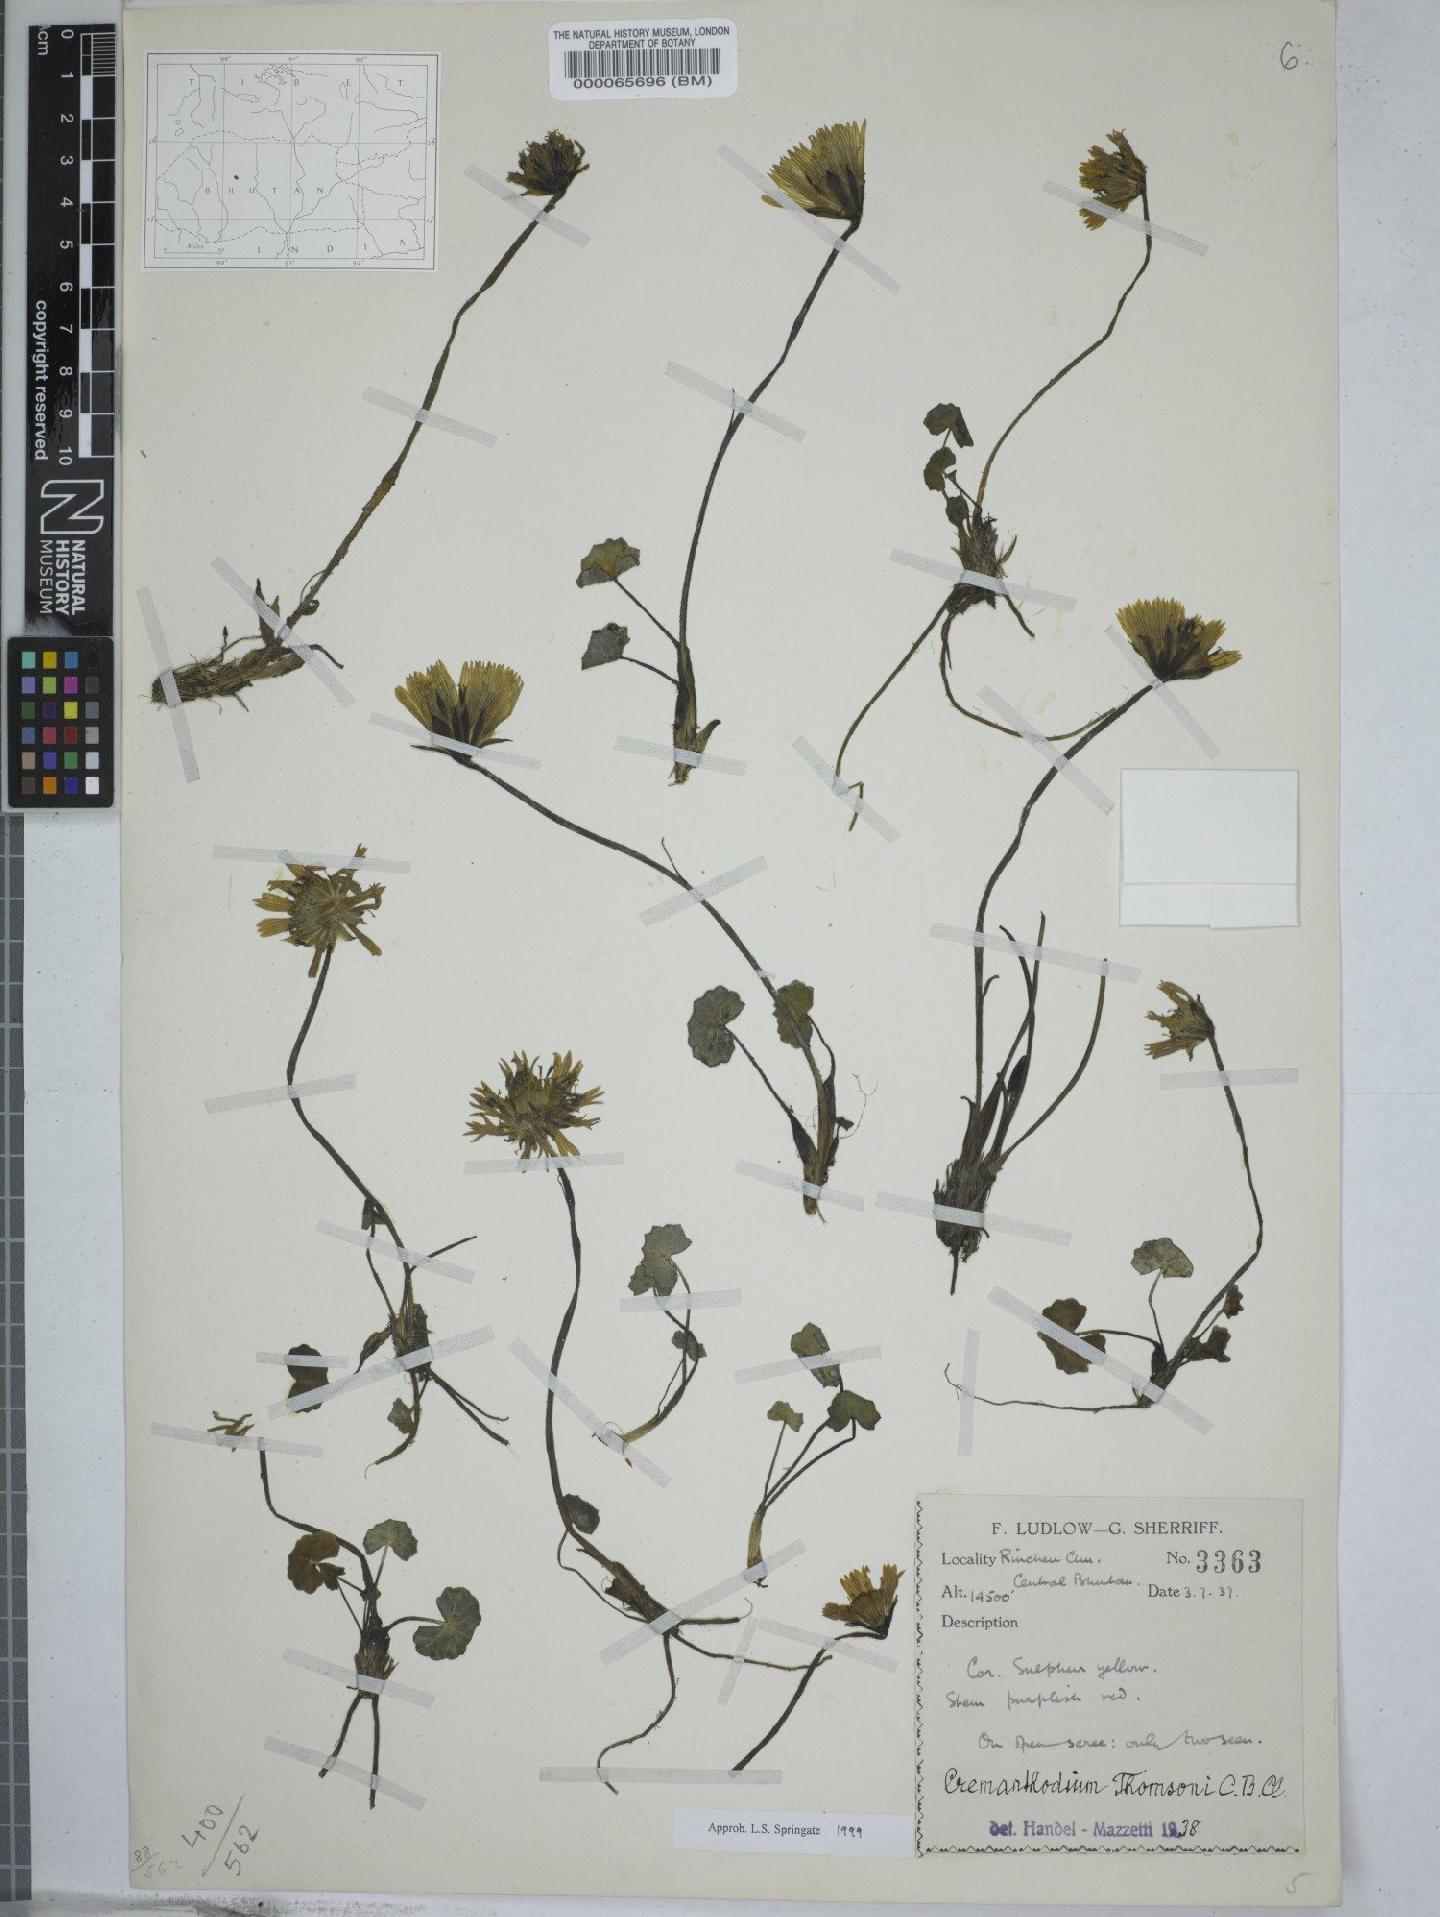 To NHMUK collection (Cremanthodium thomsonii C.B.Clarke; NHMUK:ecatalogue:9149313)